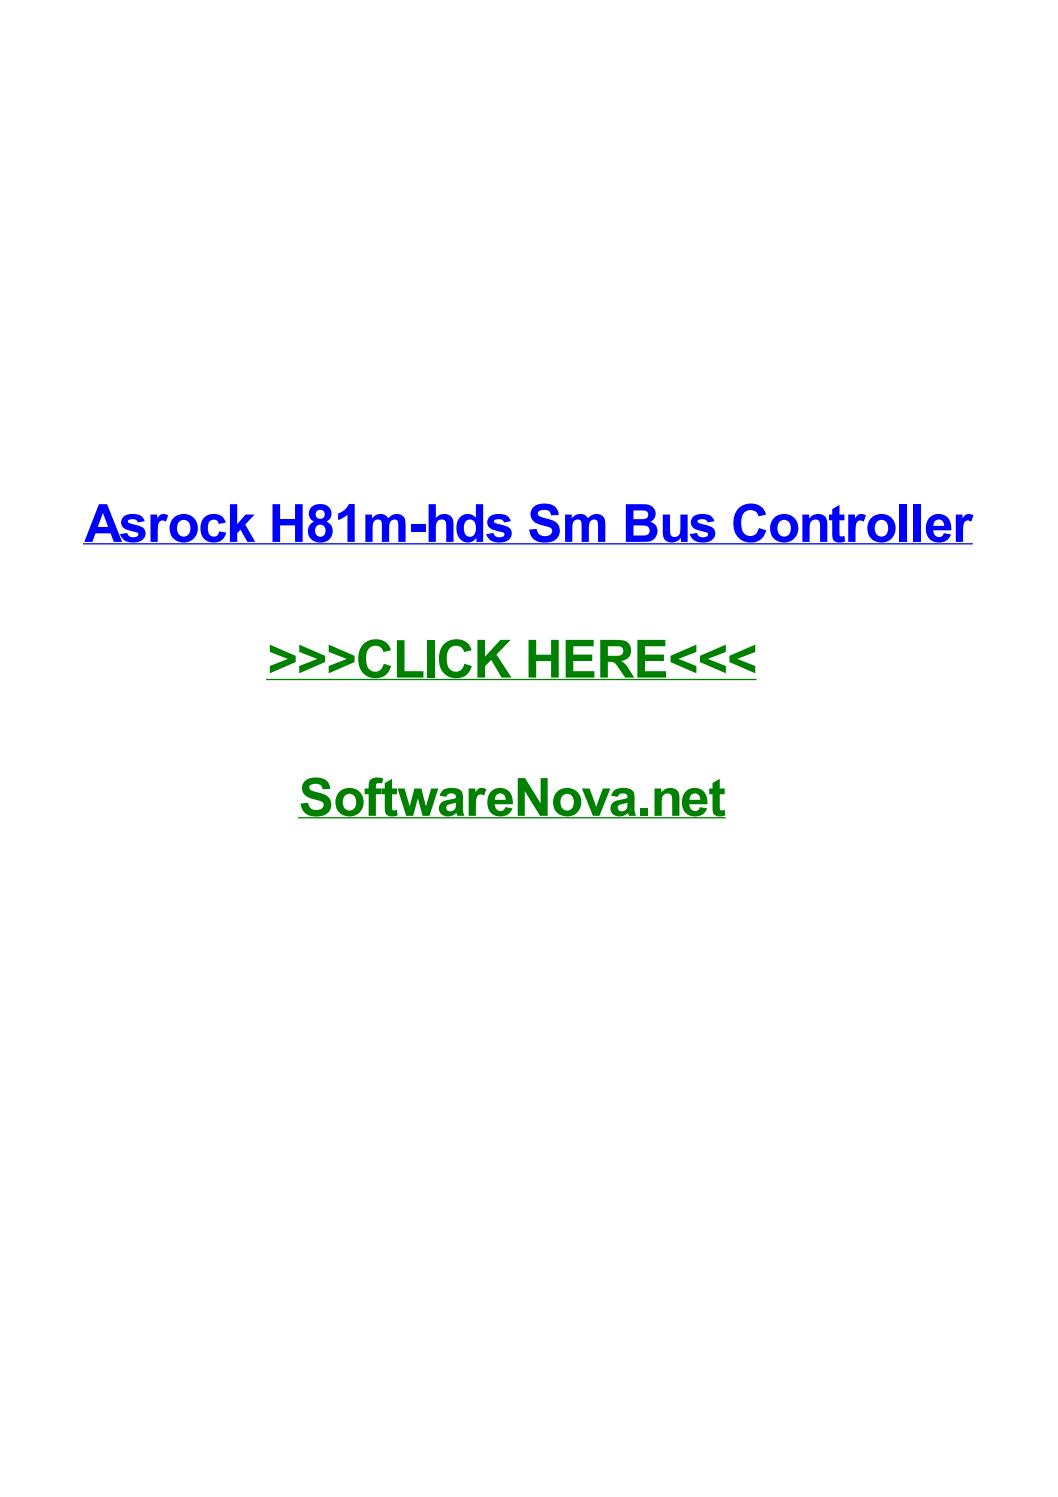 dell sm bus controller windows 7 driver